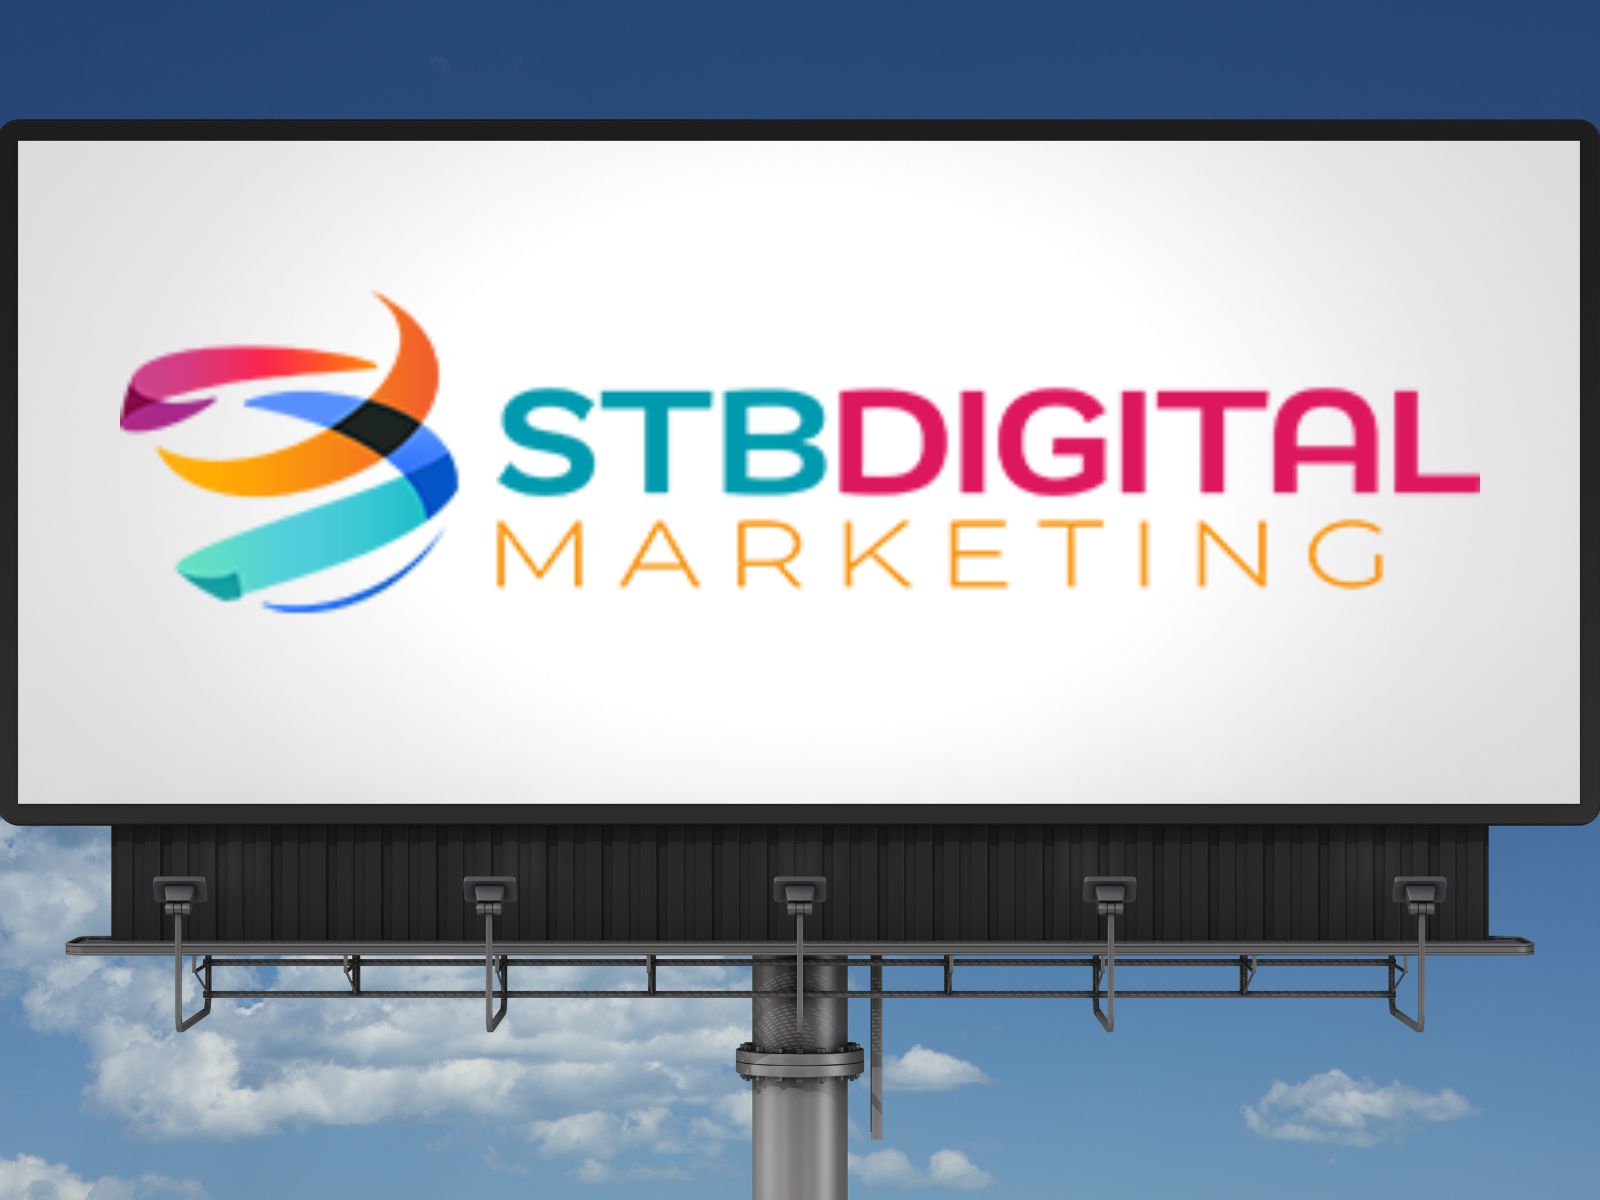 simply the best digital marketing billboard